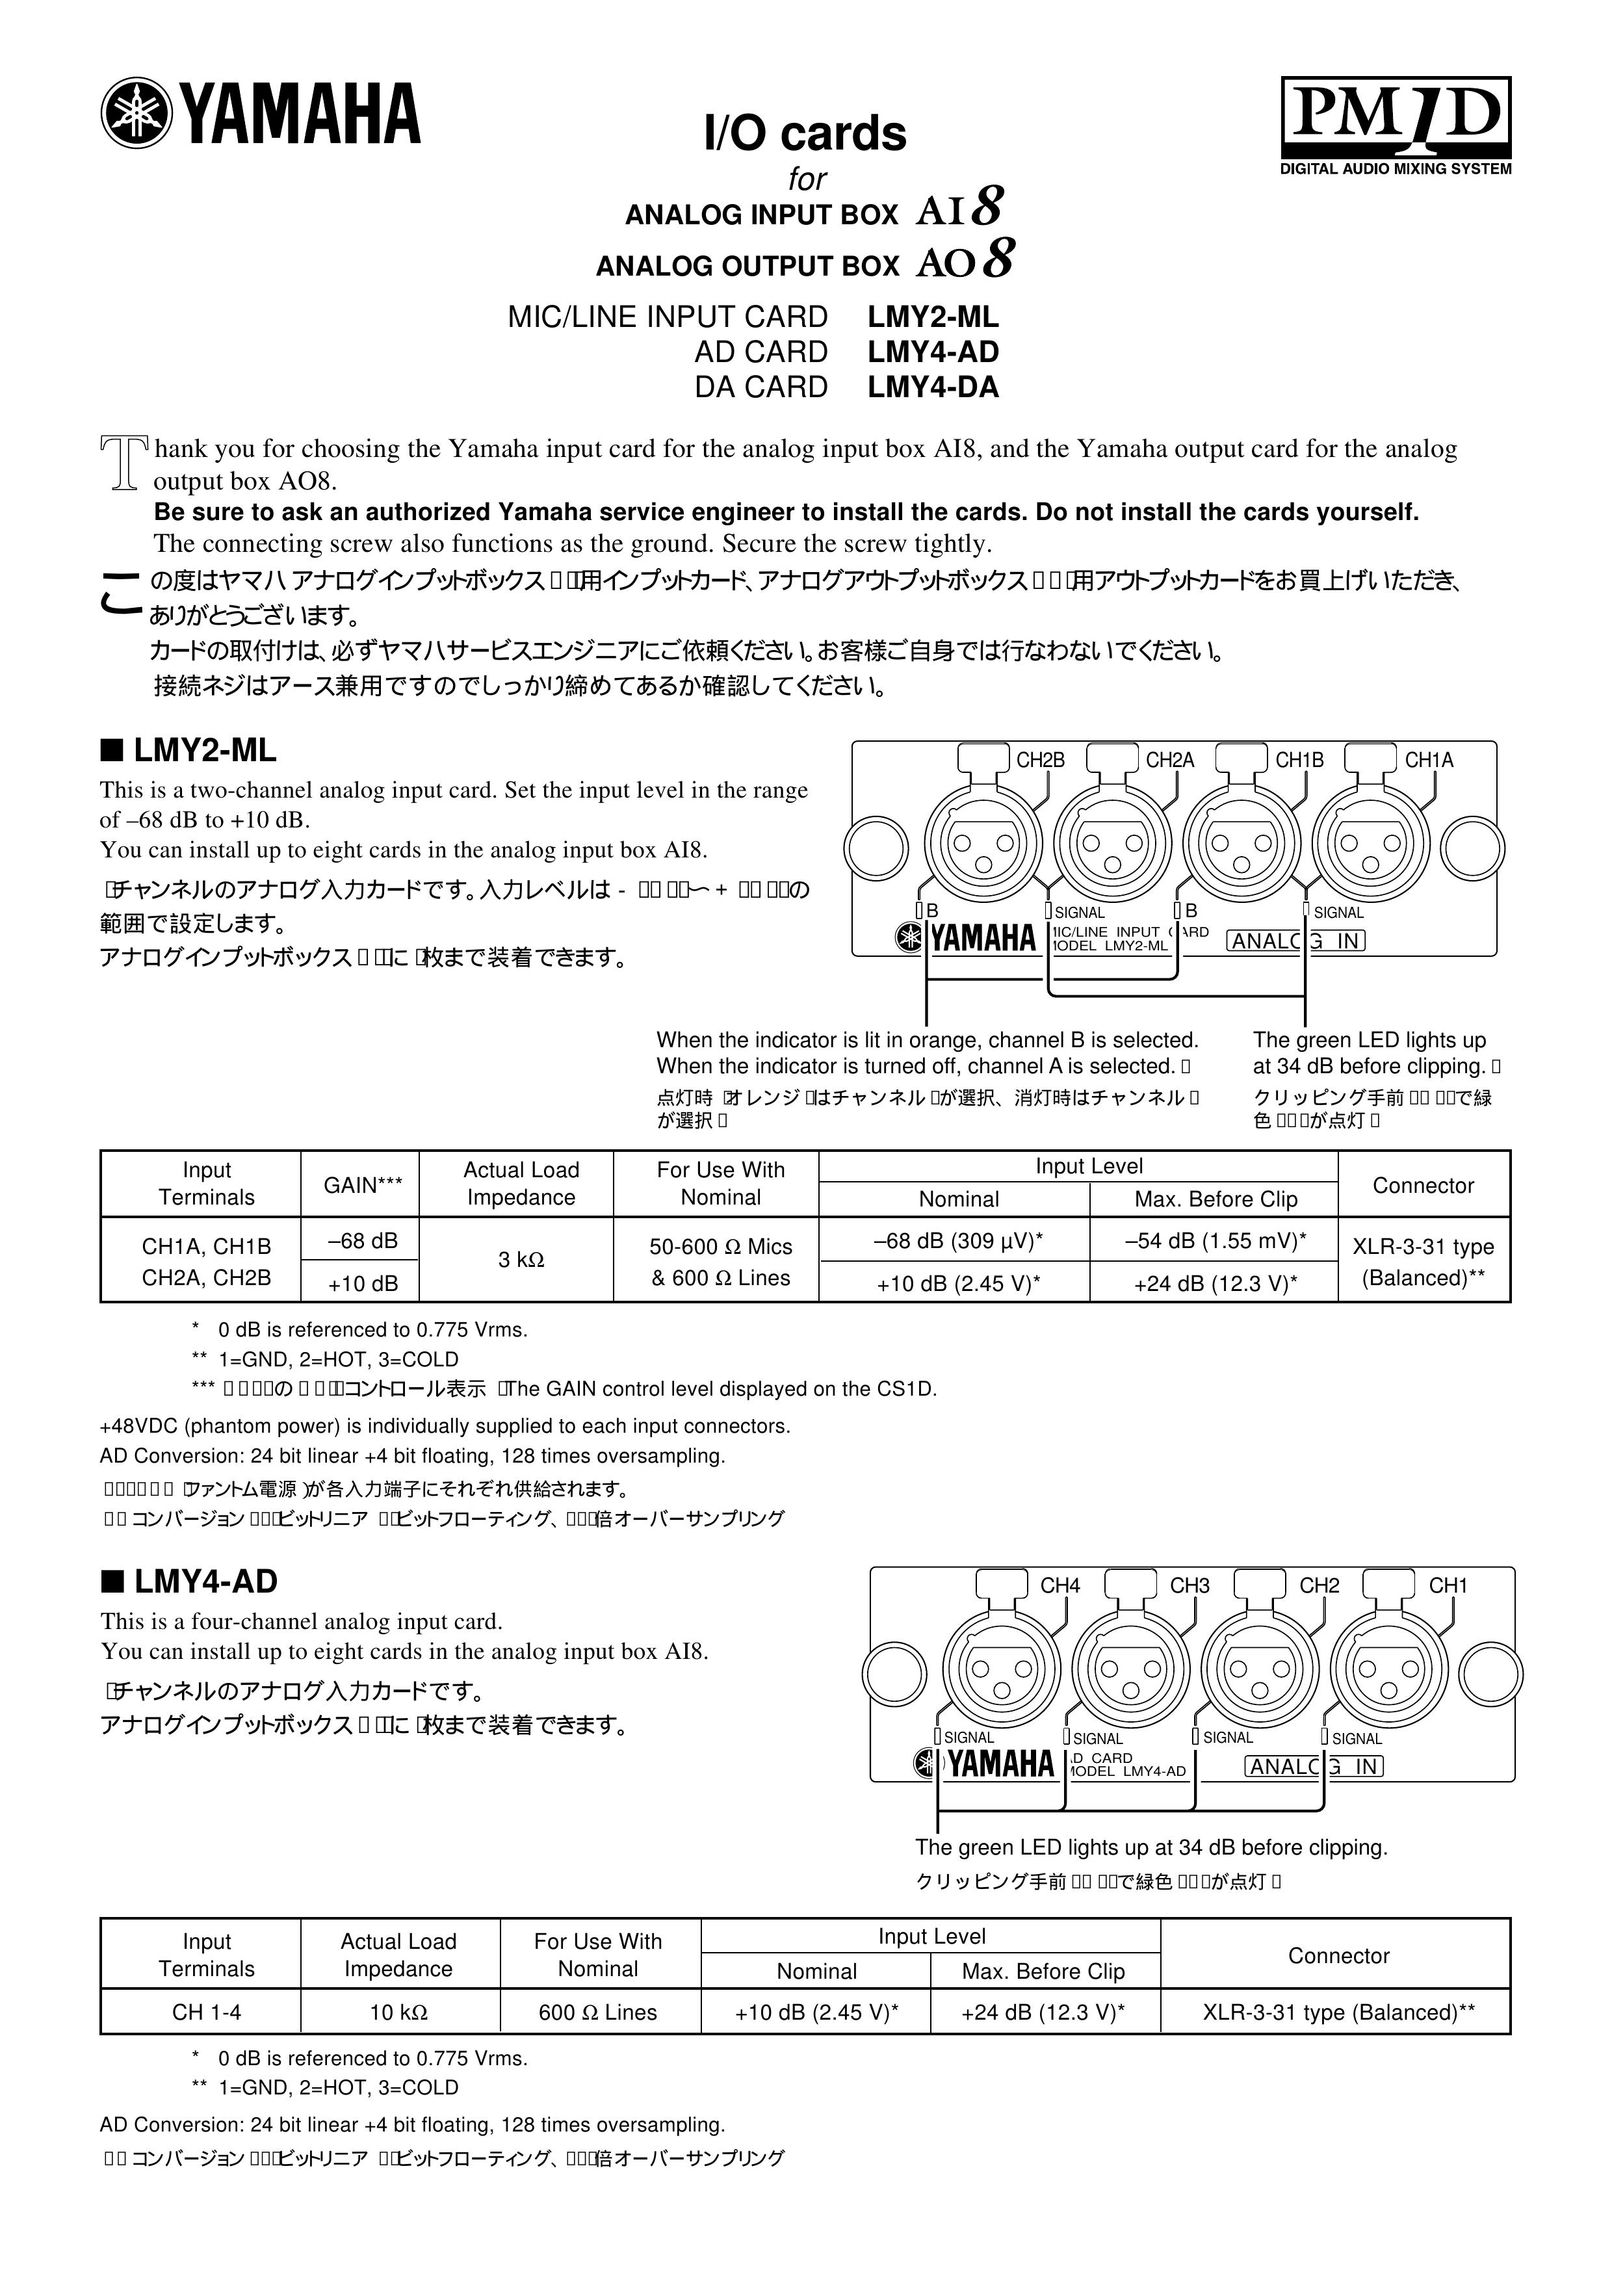 Yamaha LMY4-AD Computer Drive User Manual